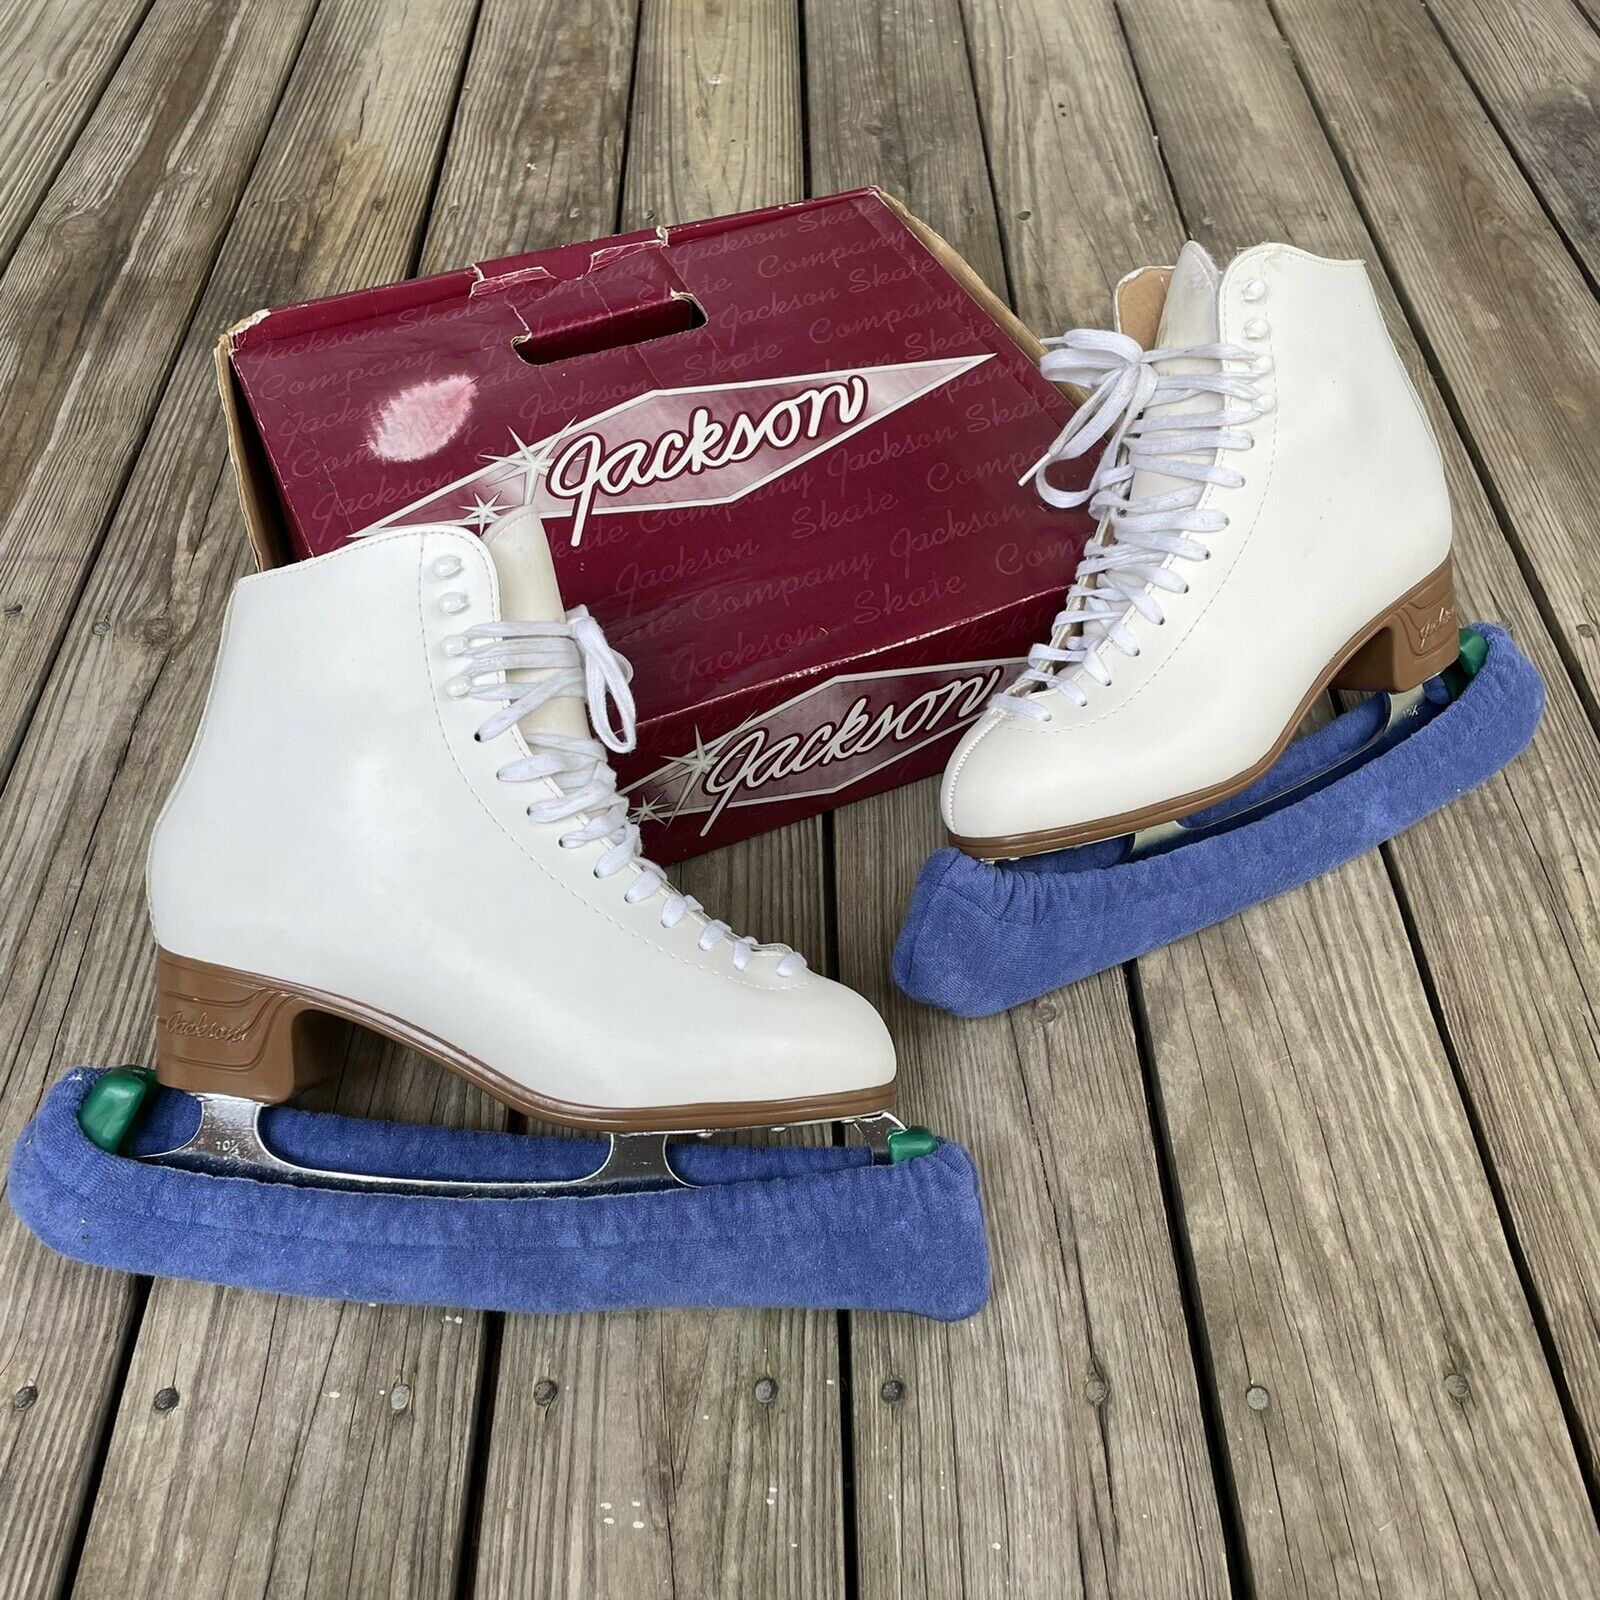 Jackson Mystique Ice Skates Box Hard Soft Blade Guards Covers Ladies Women’s 9